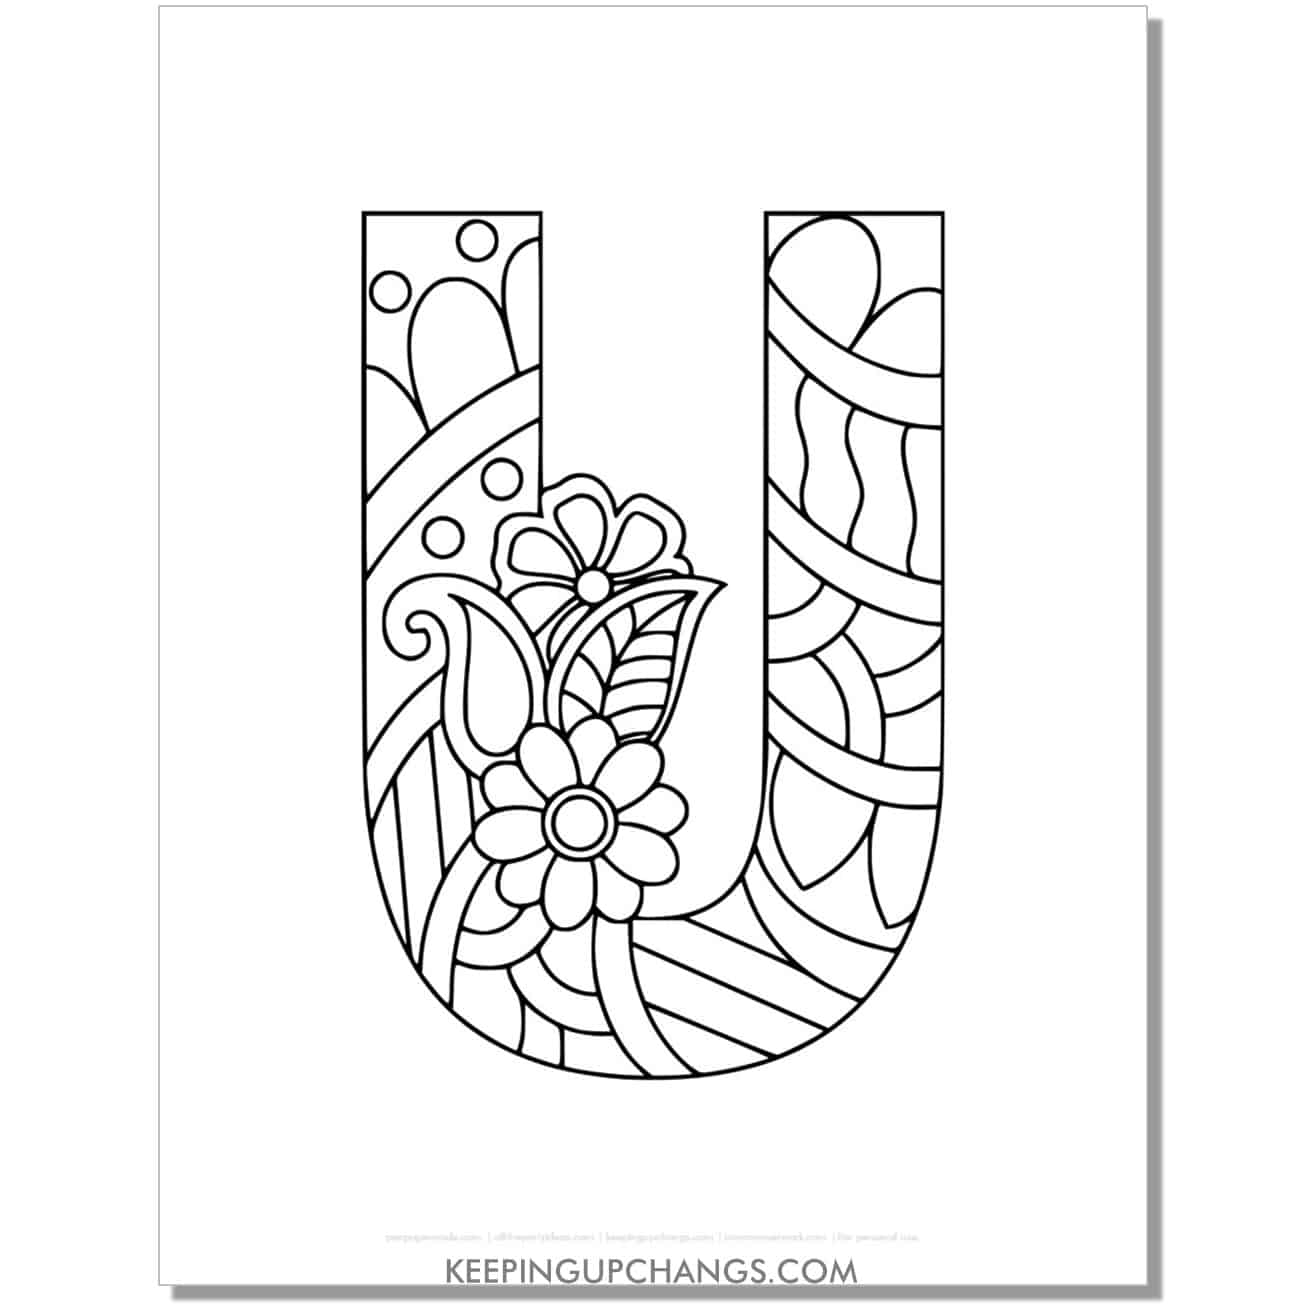 free alphabet u to color, intricate flower mandala zentangle.